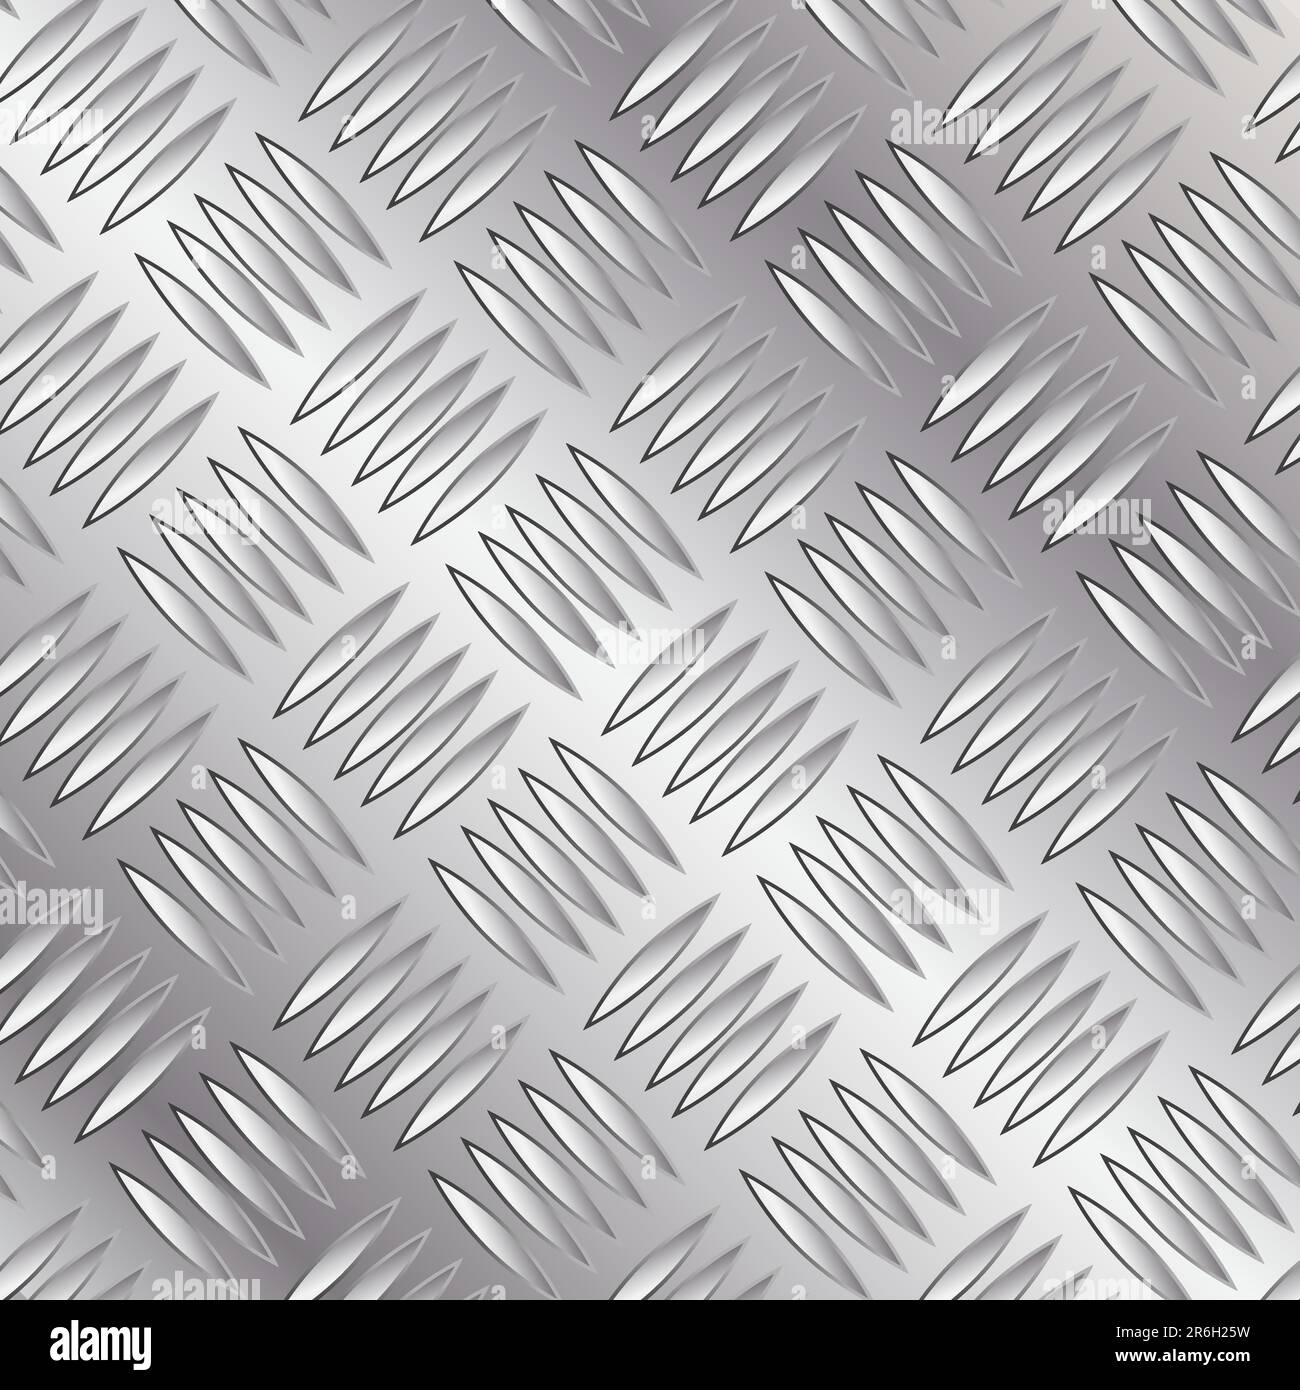 Fond en acier inoxydable - profil / texture Illustration de Vecteur